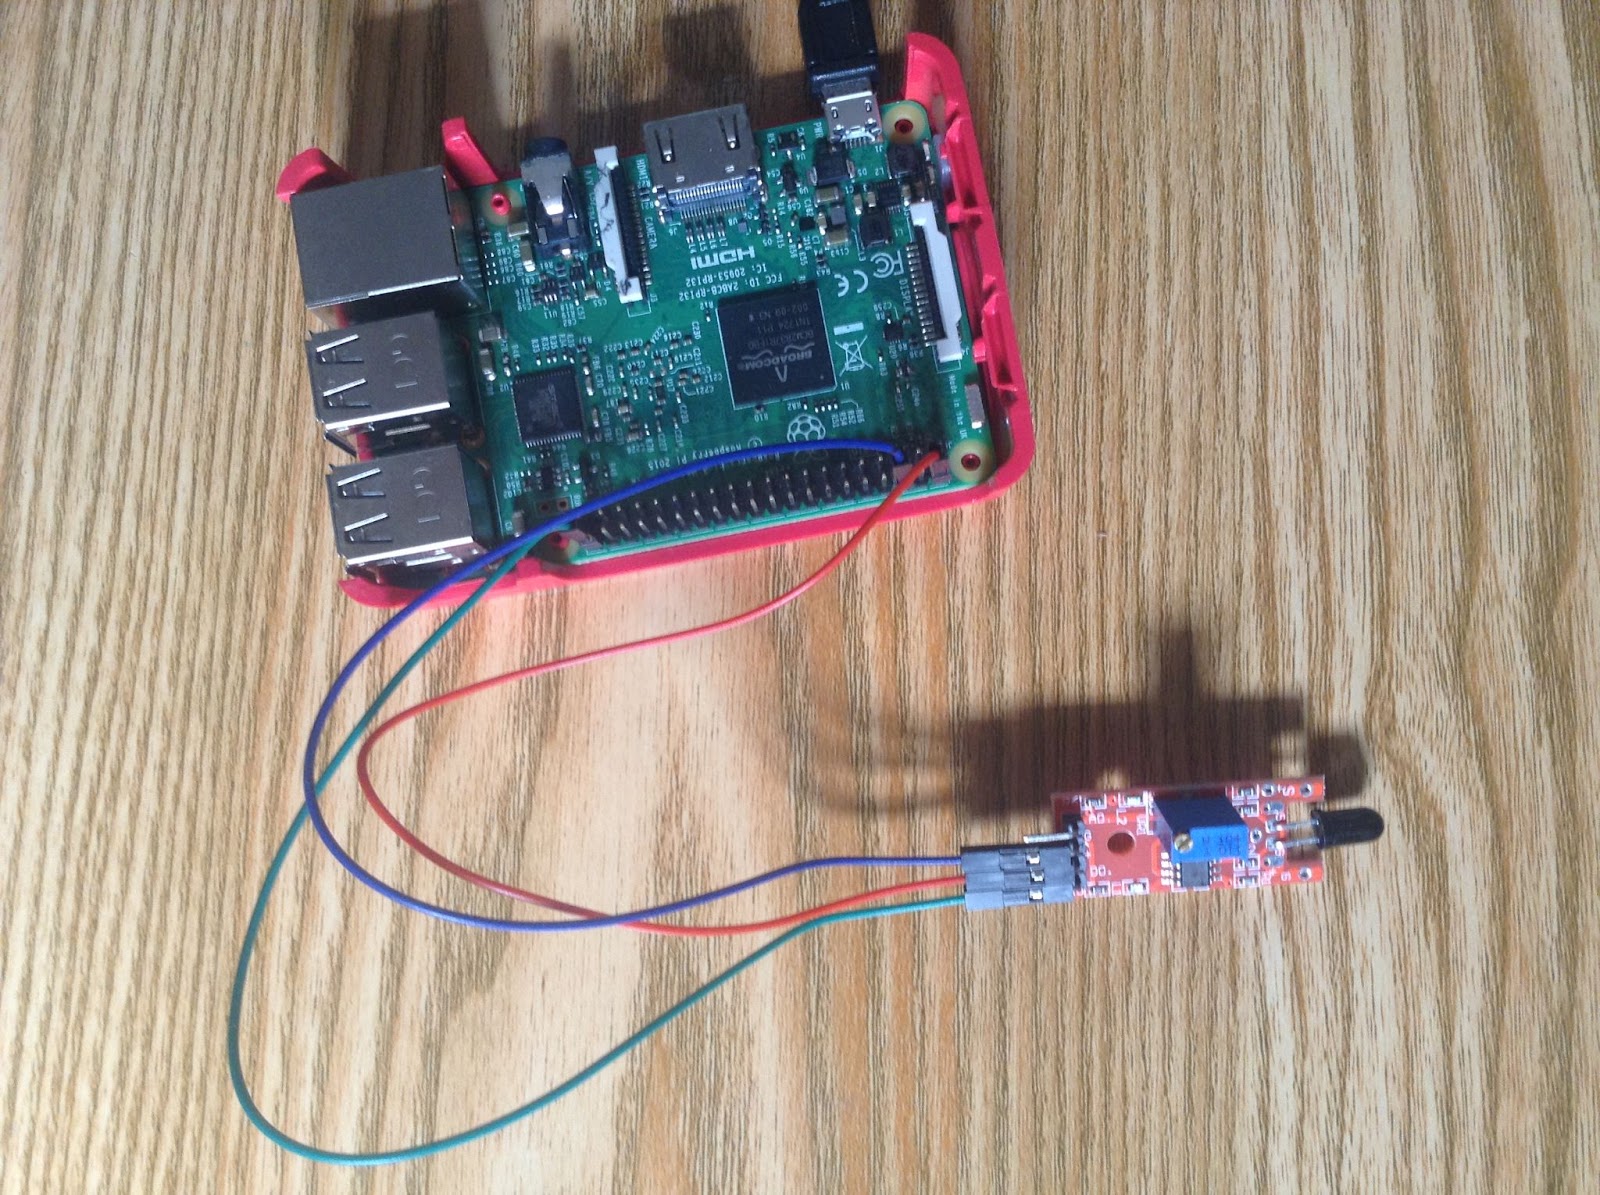 IR flame sensor connected to Raspberry Pi